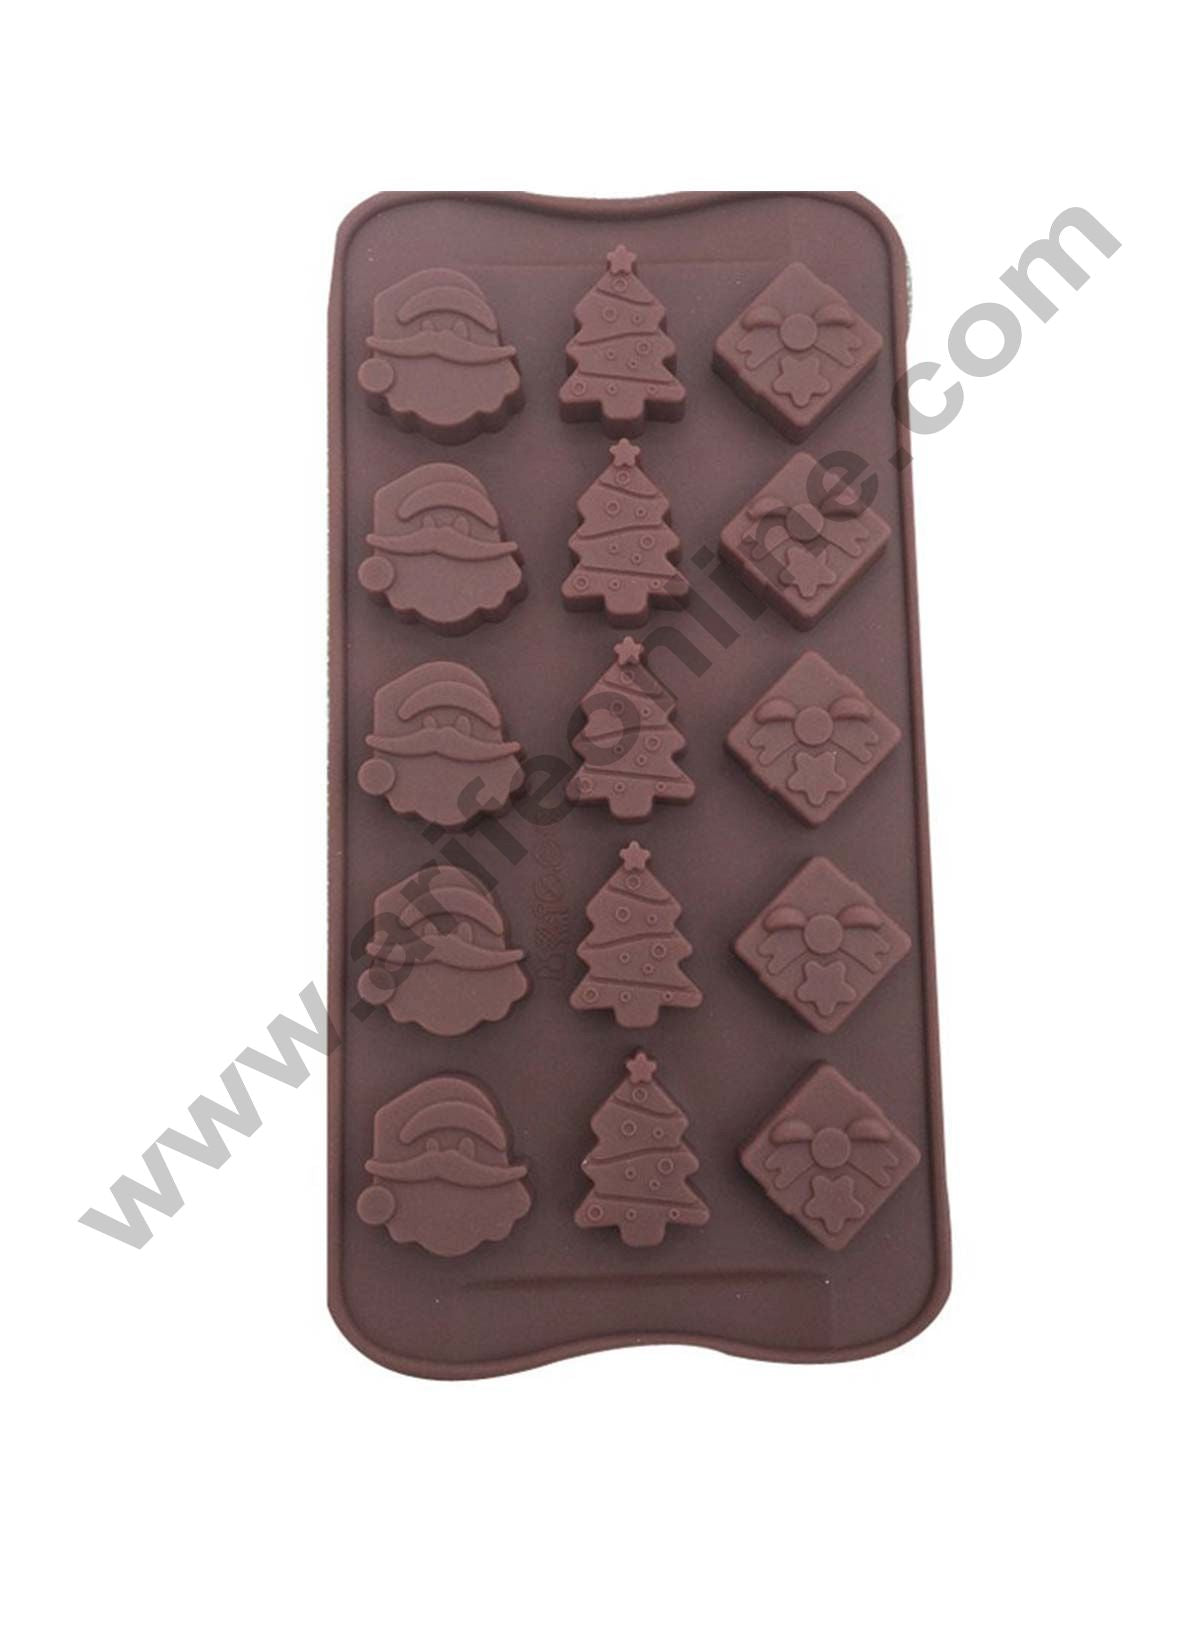 Silikomart Christmas Brown Silicone 12 Compartment Chocolate Mold SCG06